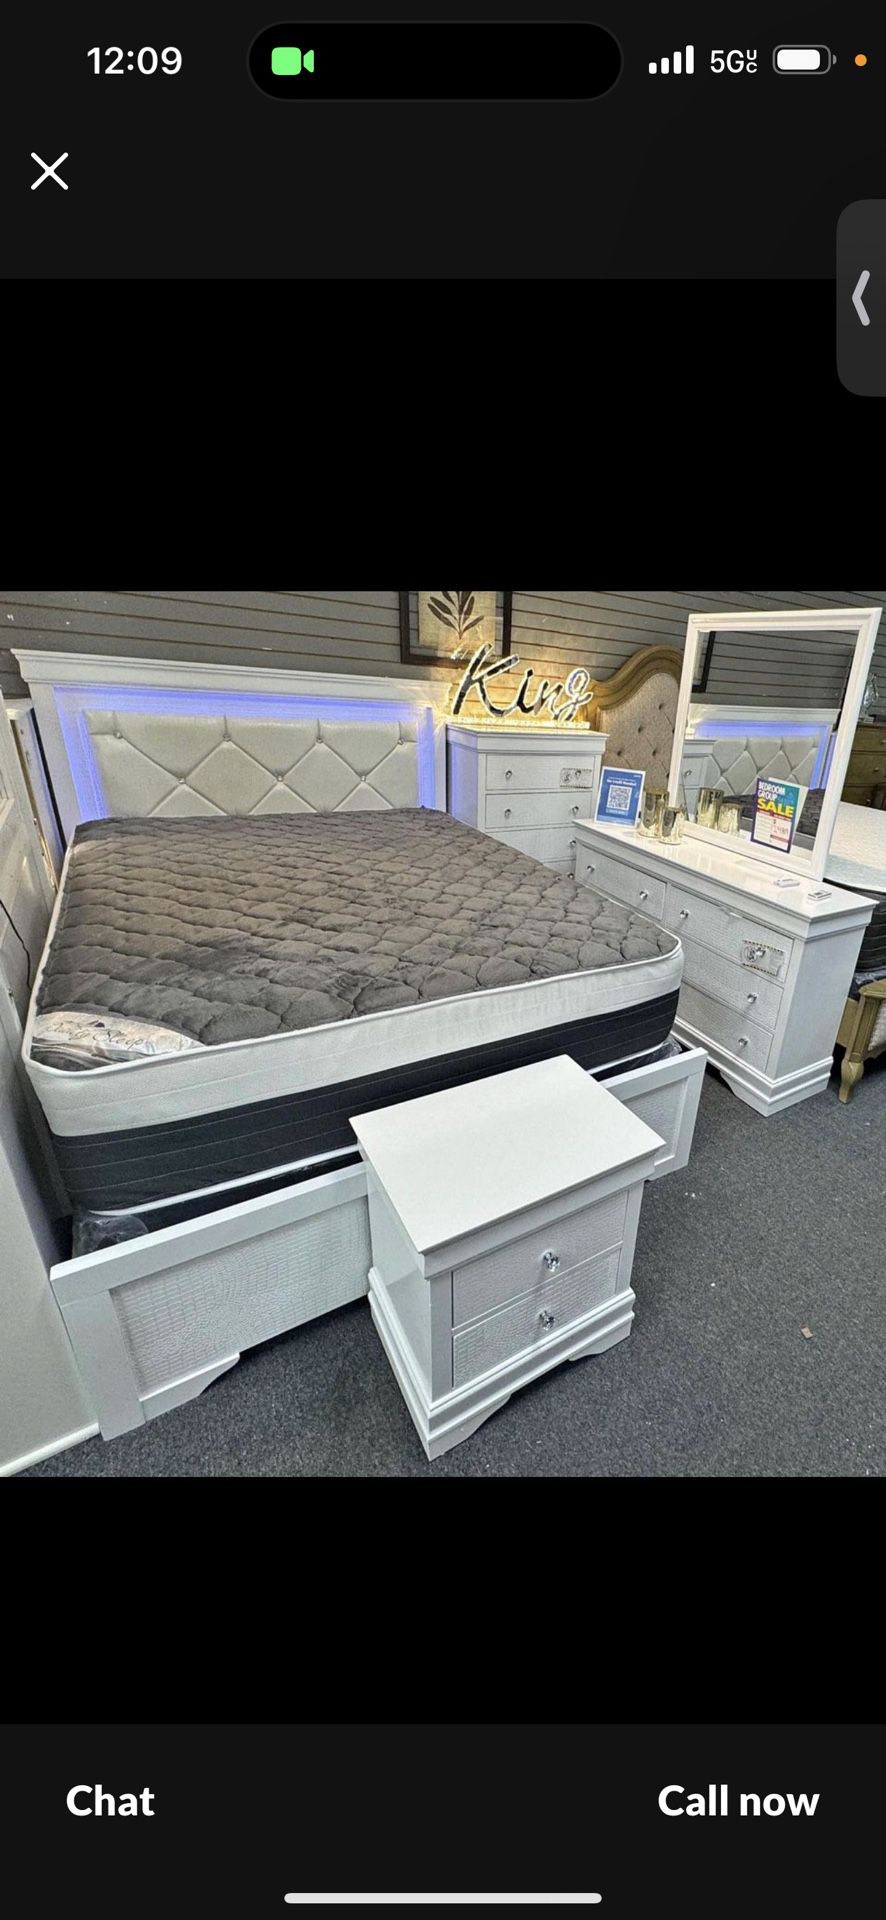 Brand New Complete Bedroom Set for $999!!!!